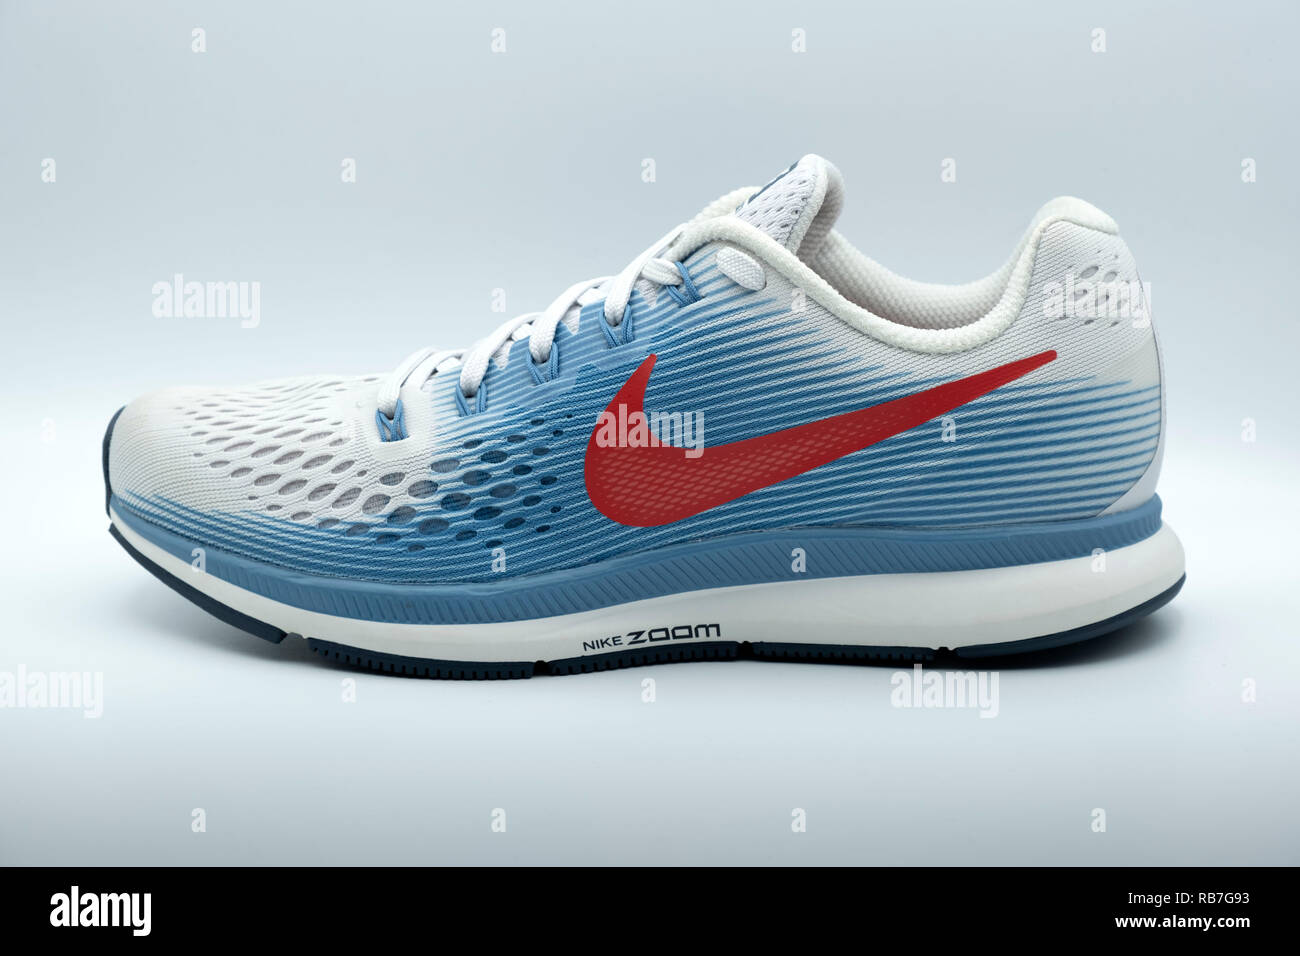 Nike logo swoosh -Fotos und -Bildmaterial in hoher Auflösung – Alamy